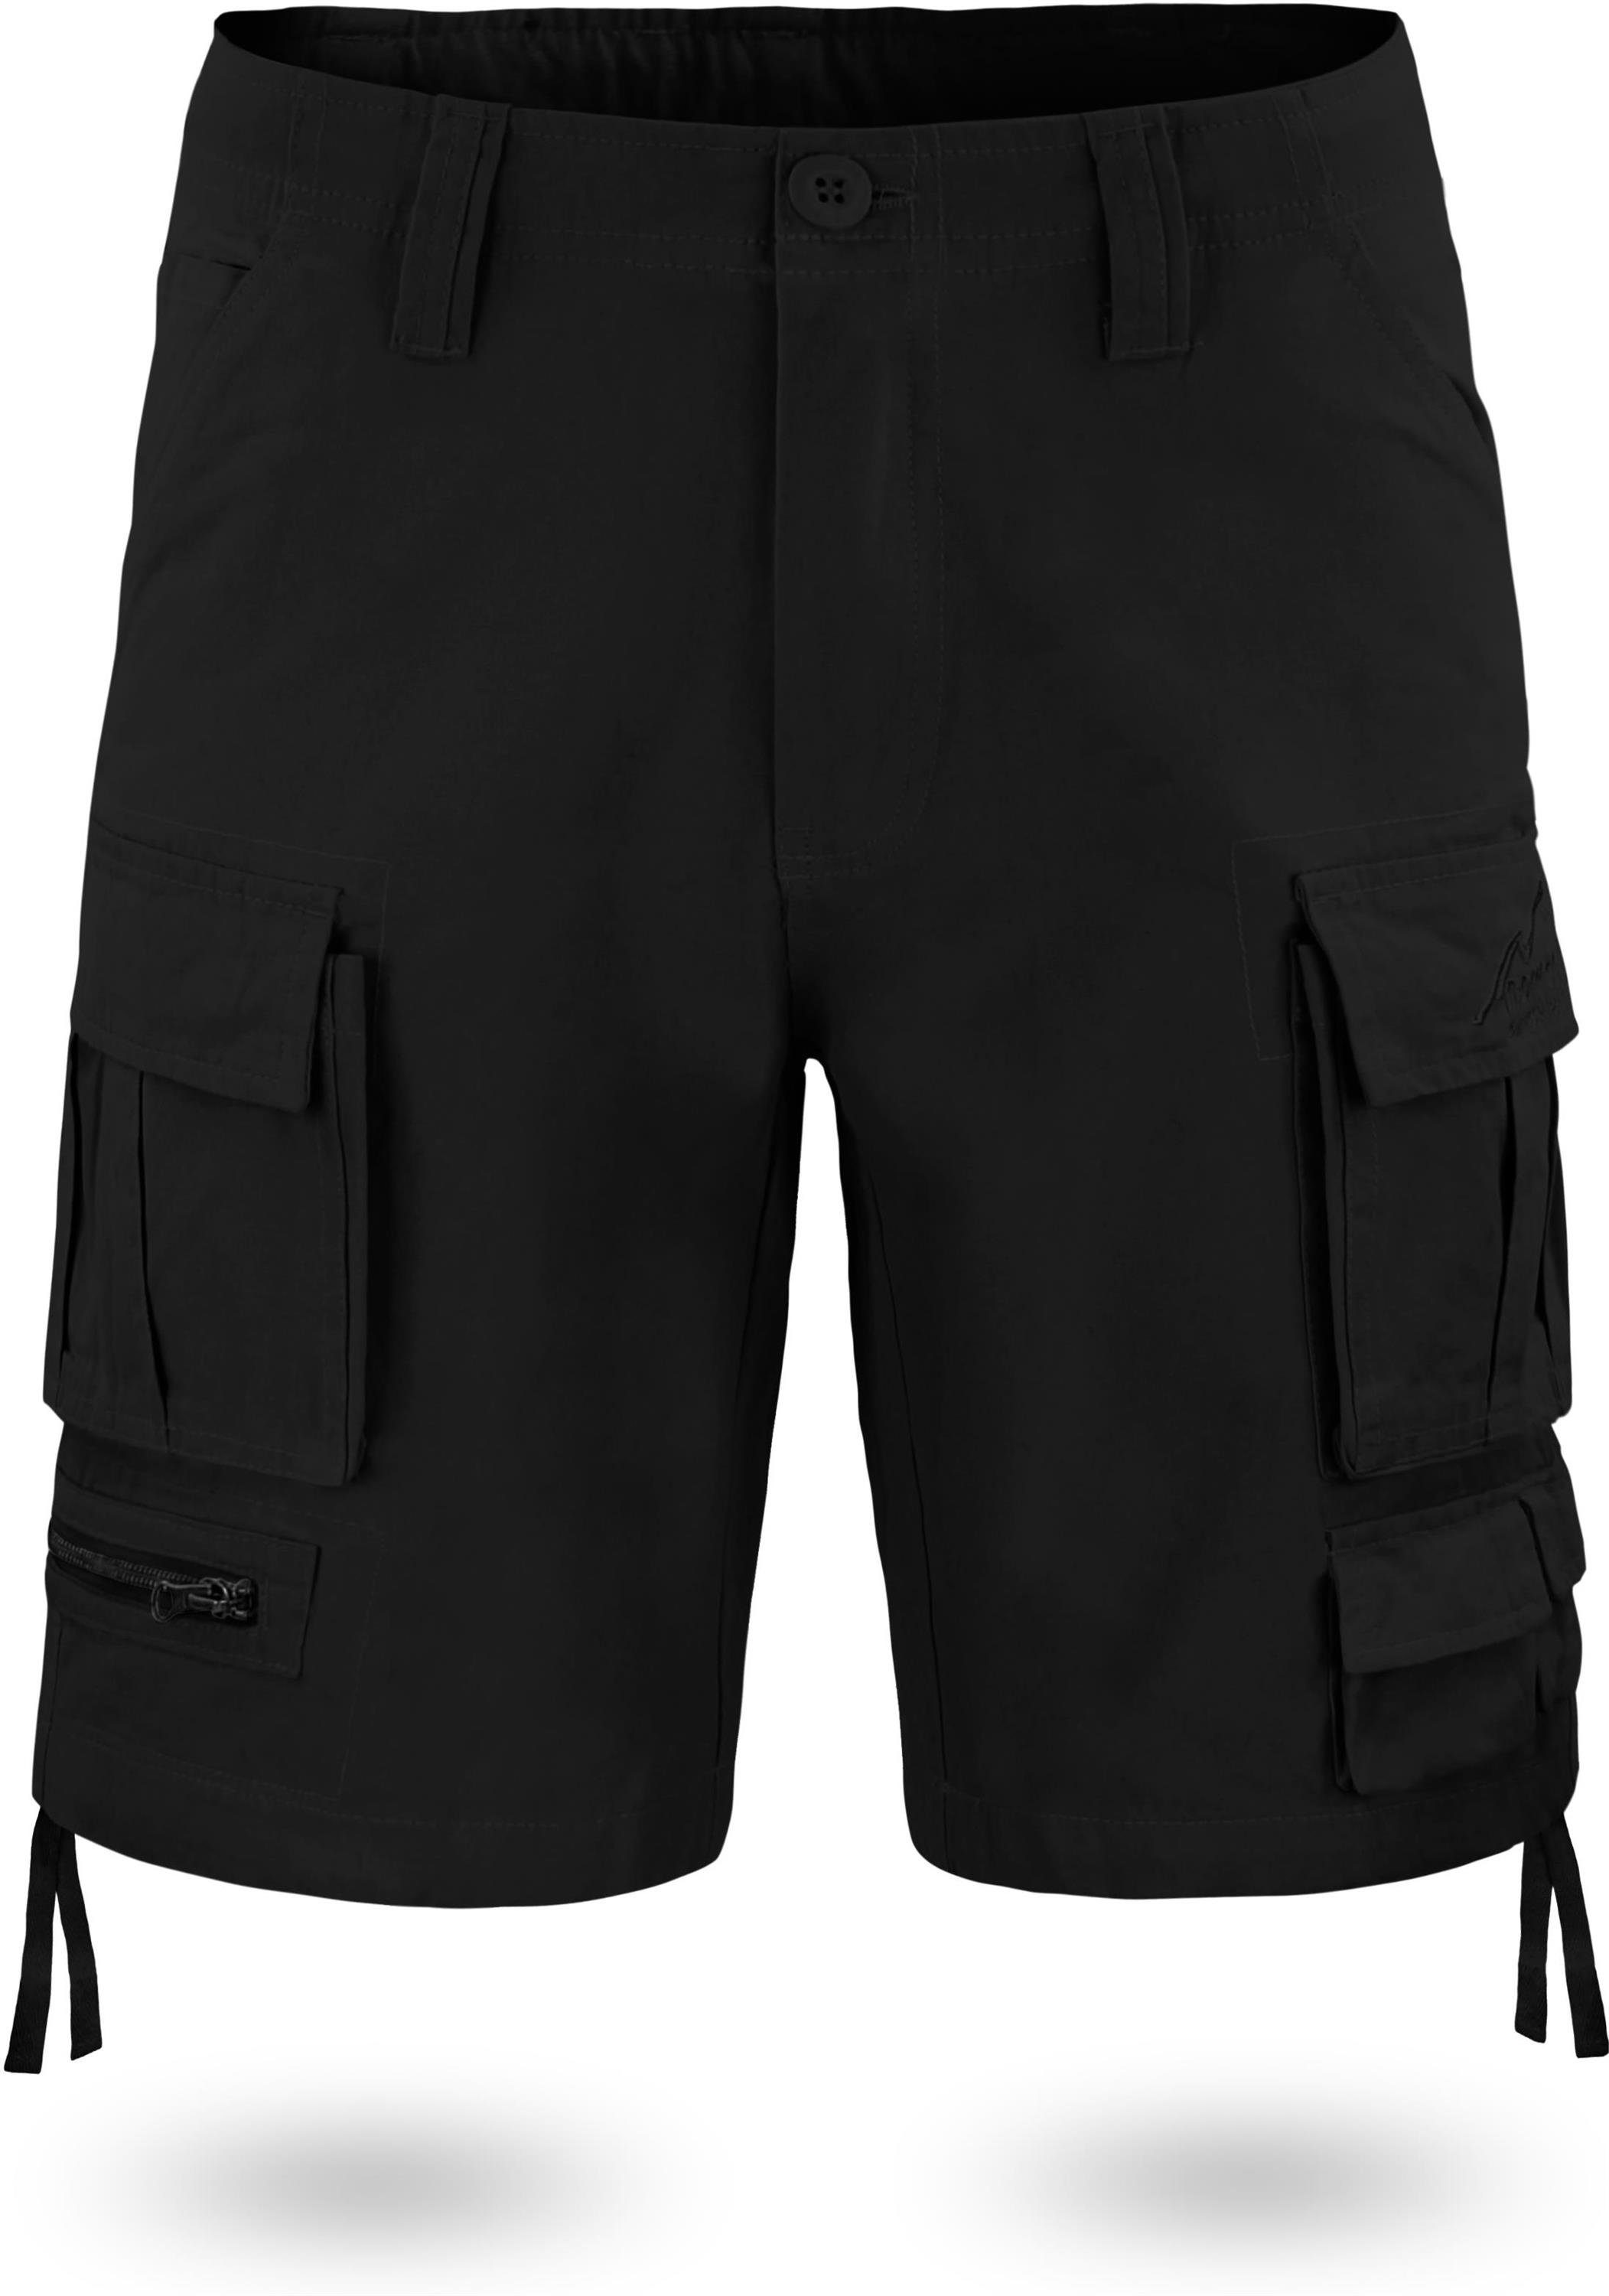 normani Bermudas 100% Herren Shorts Schwarz Atacama aus kurze Vintage Bio-Baumwolle Cargoshorts Shorts Sommershorts